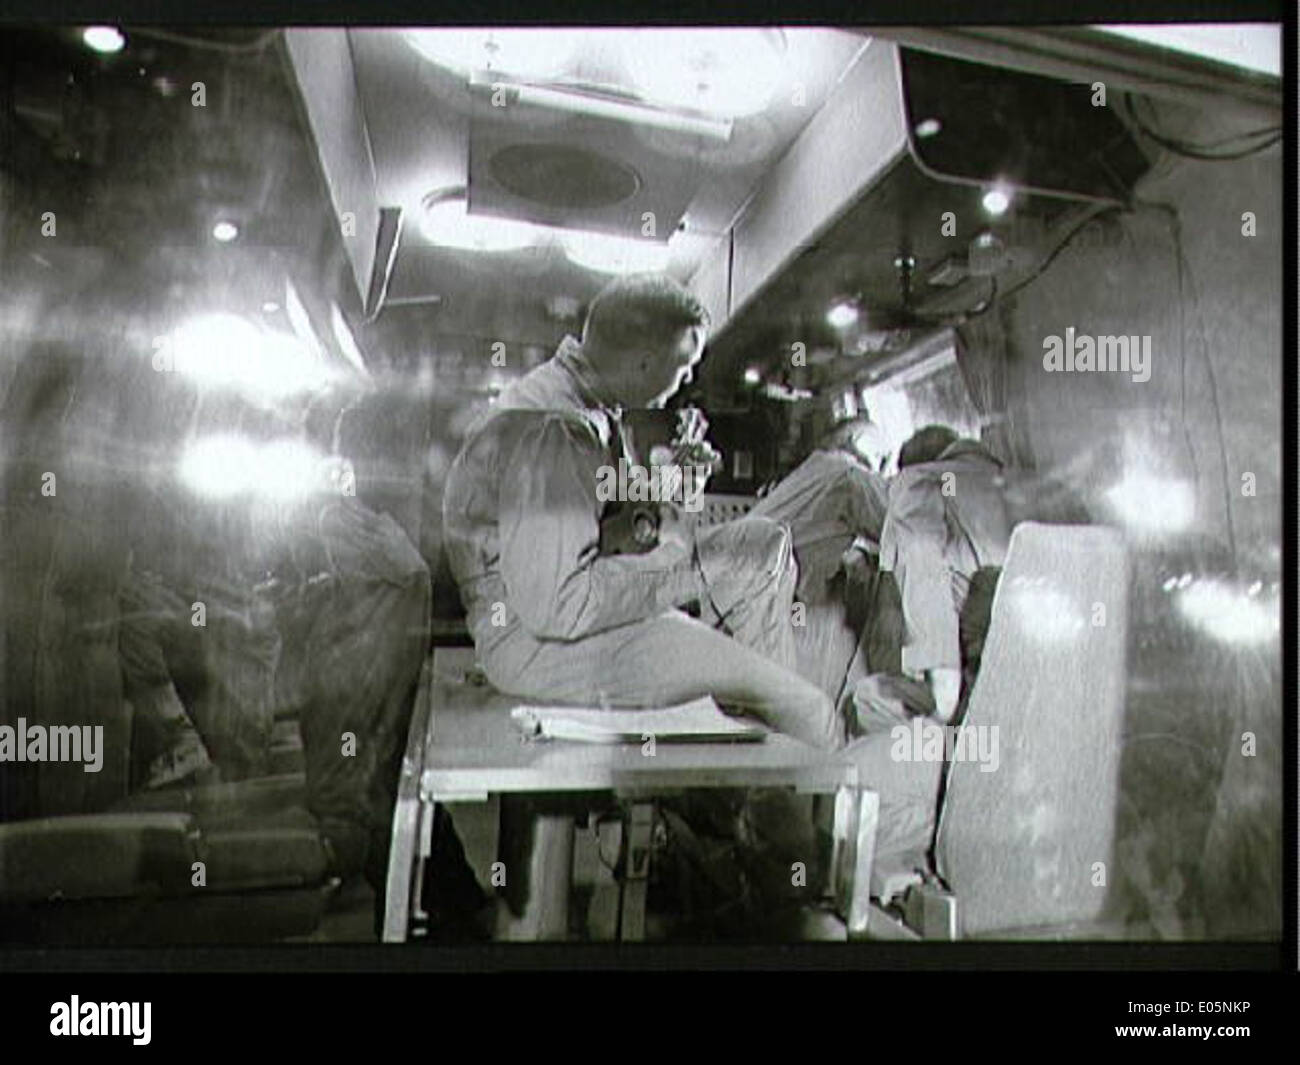 Interior view of Mobile Quarantine Facility with Apollo 11 crewmembers Stock Photo